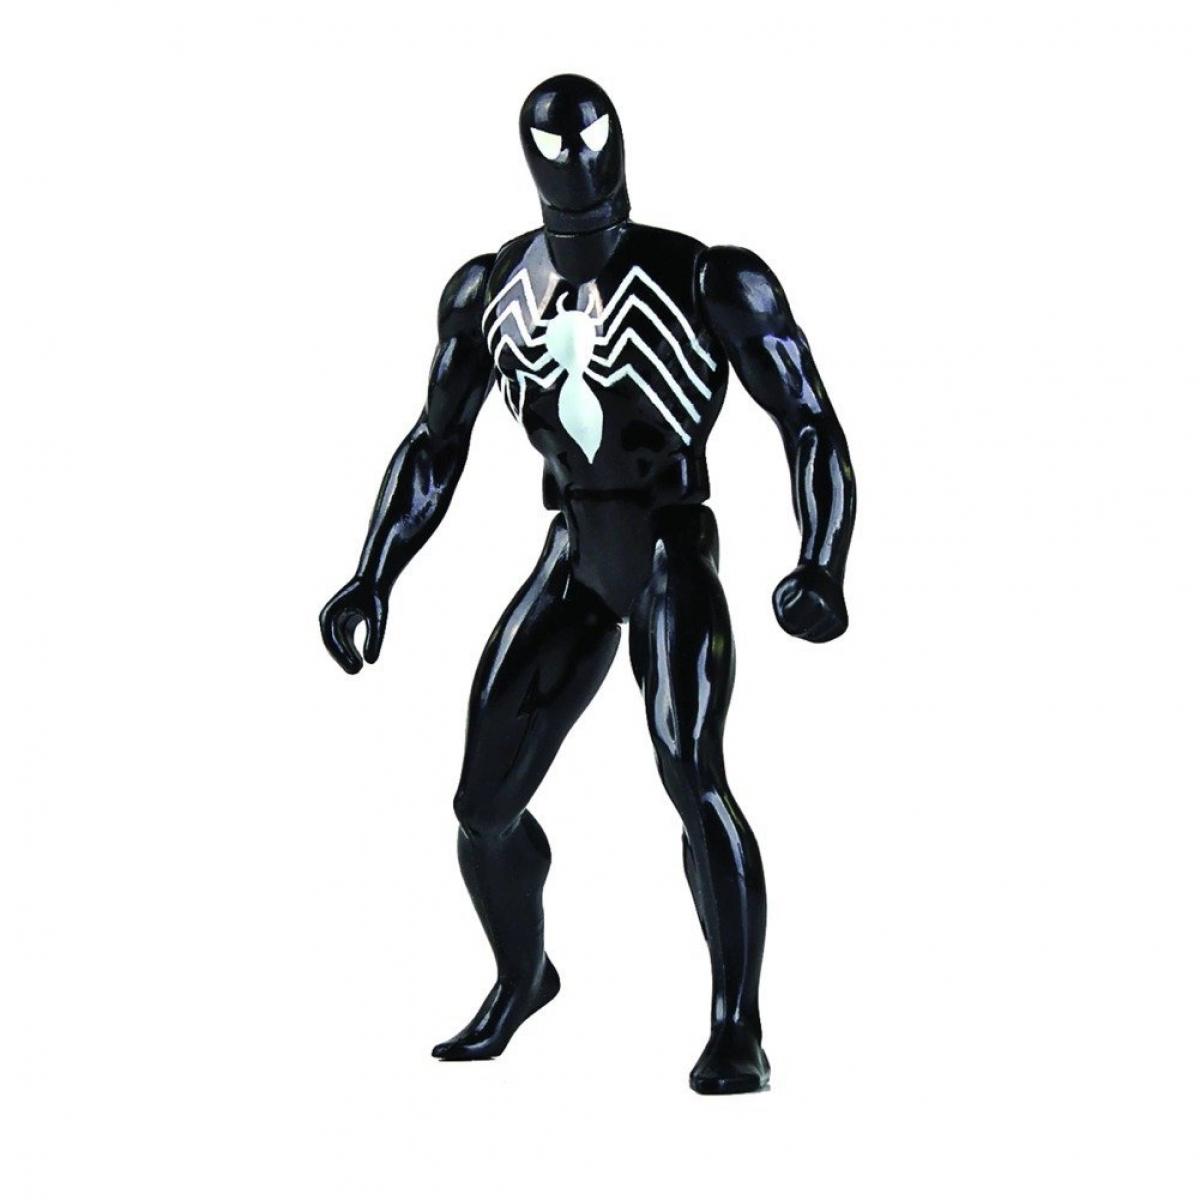 Symbiote Spider-Man: Jumbo Action Figure